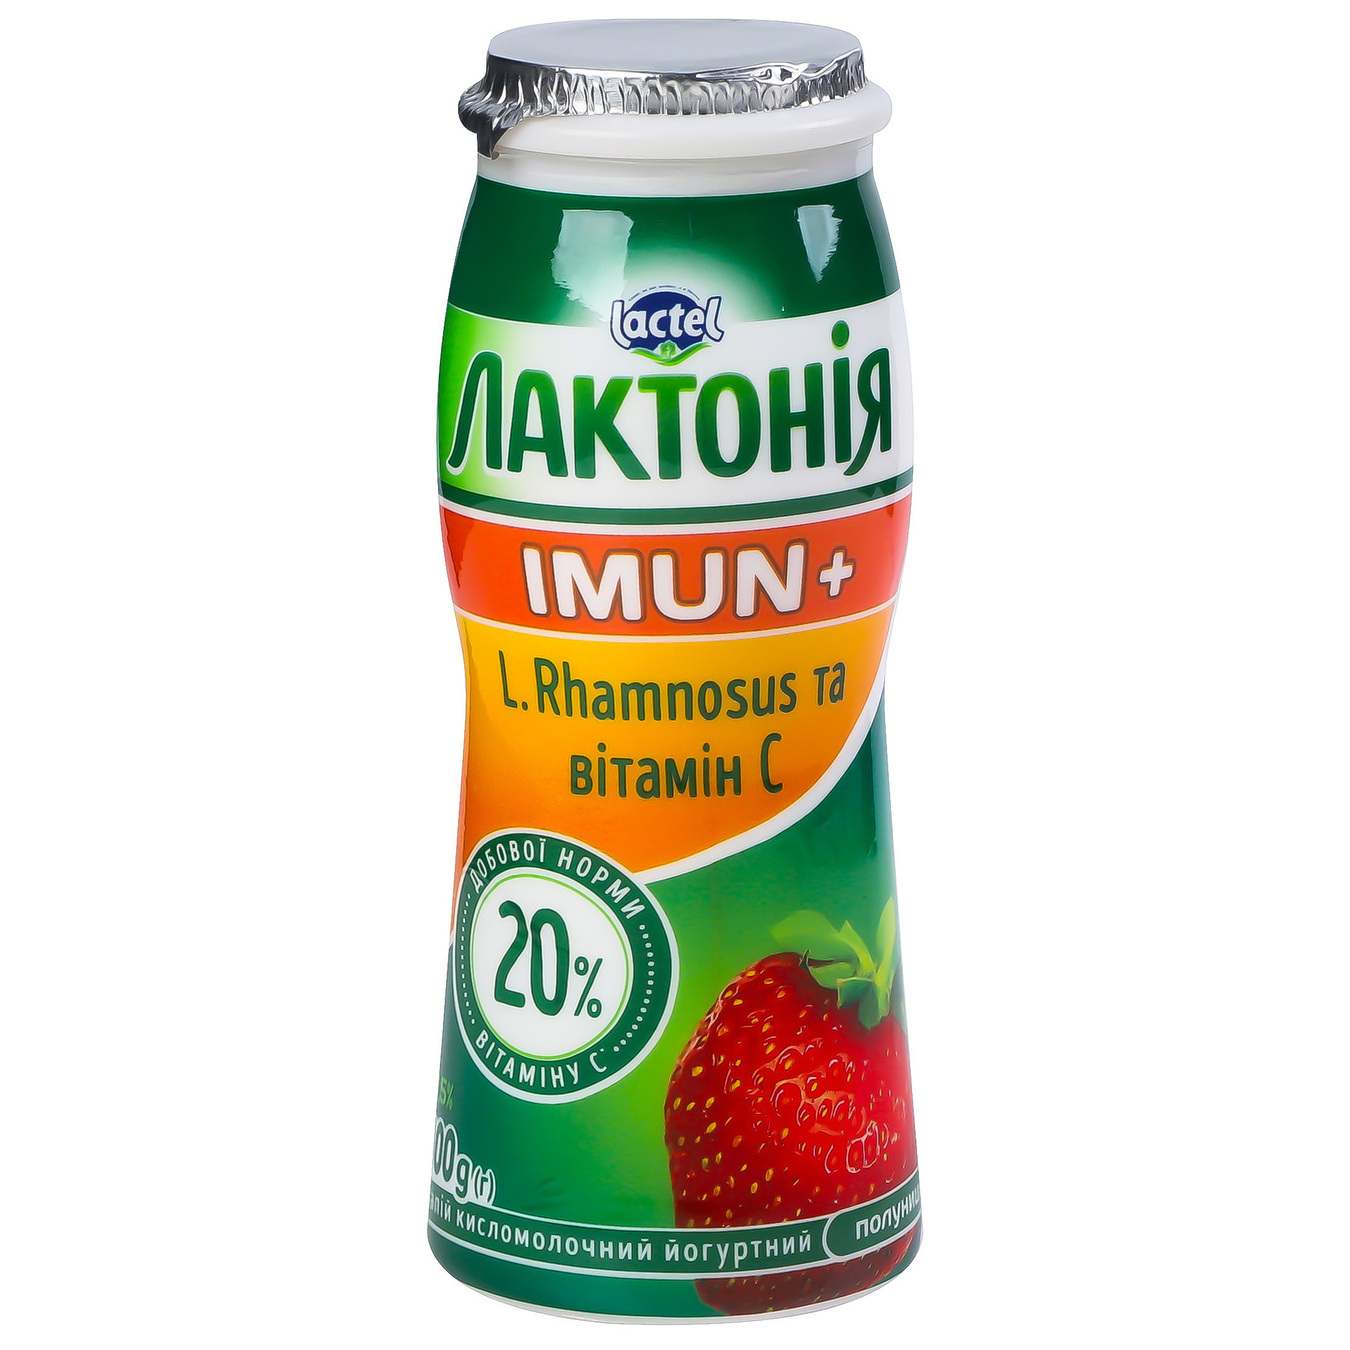 Lactonia Imun strawberry with probiotic L. Rhamnosus vitamin C Sour milk drink 1.5% 100g 2